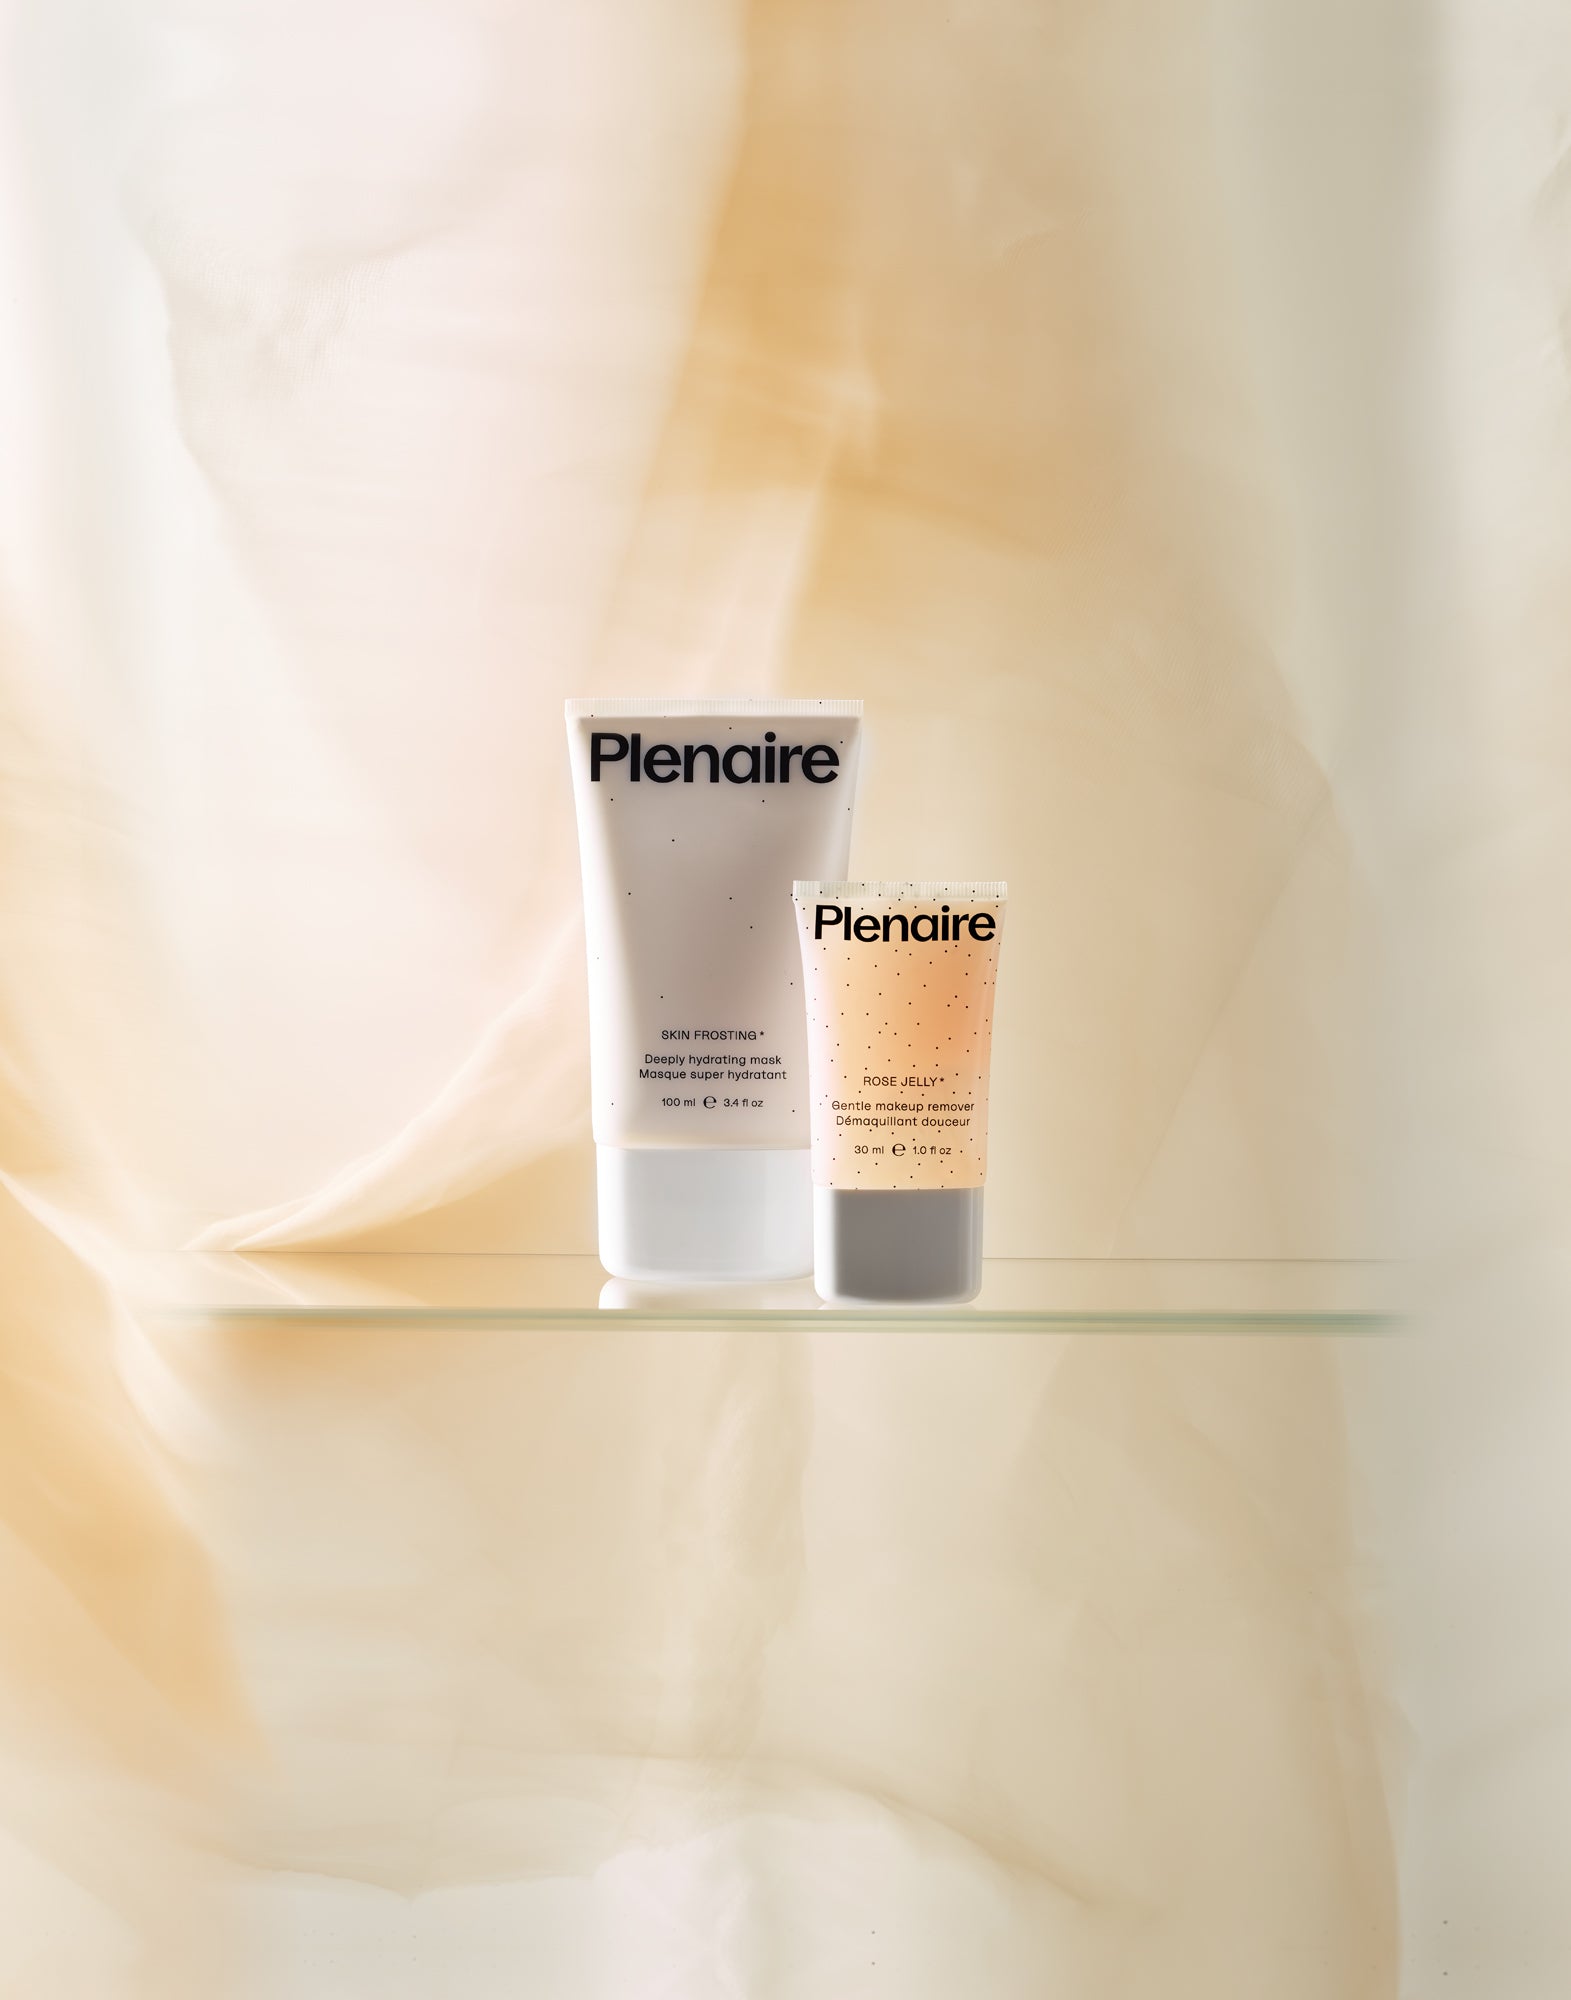 Plenaire: The Modern Clean Brand